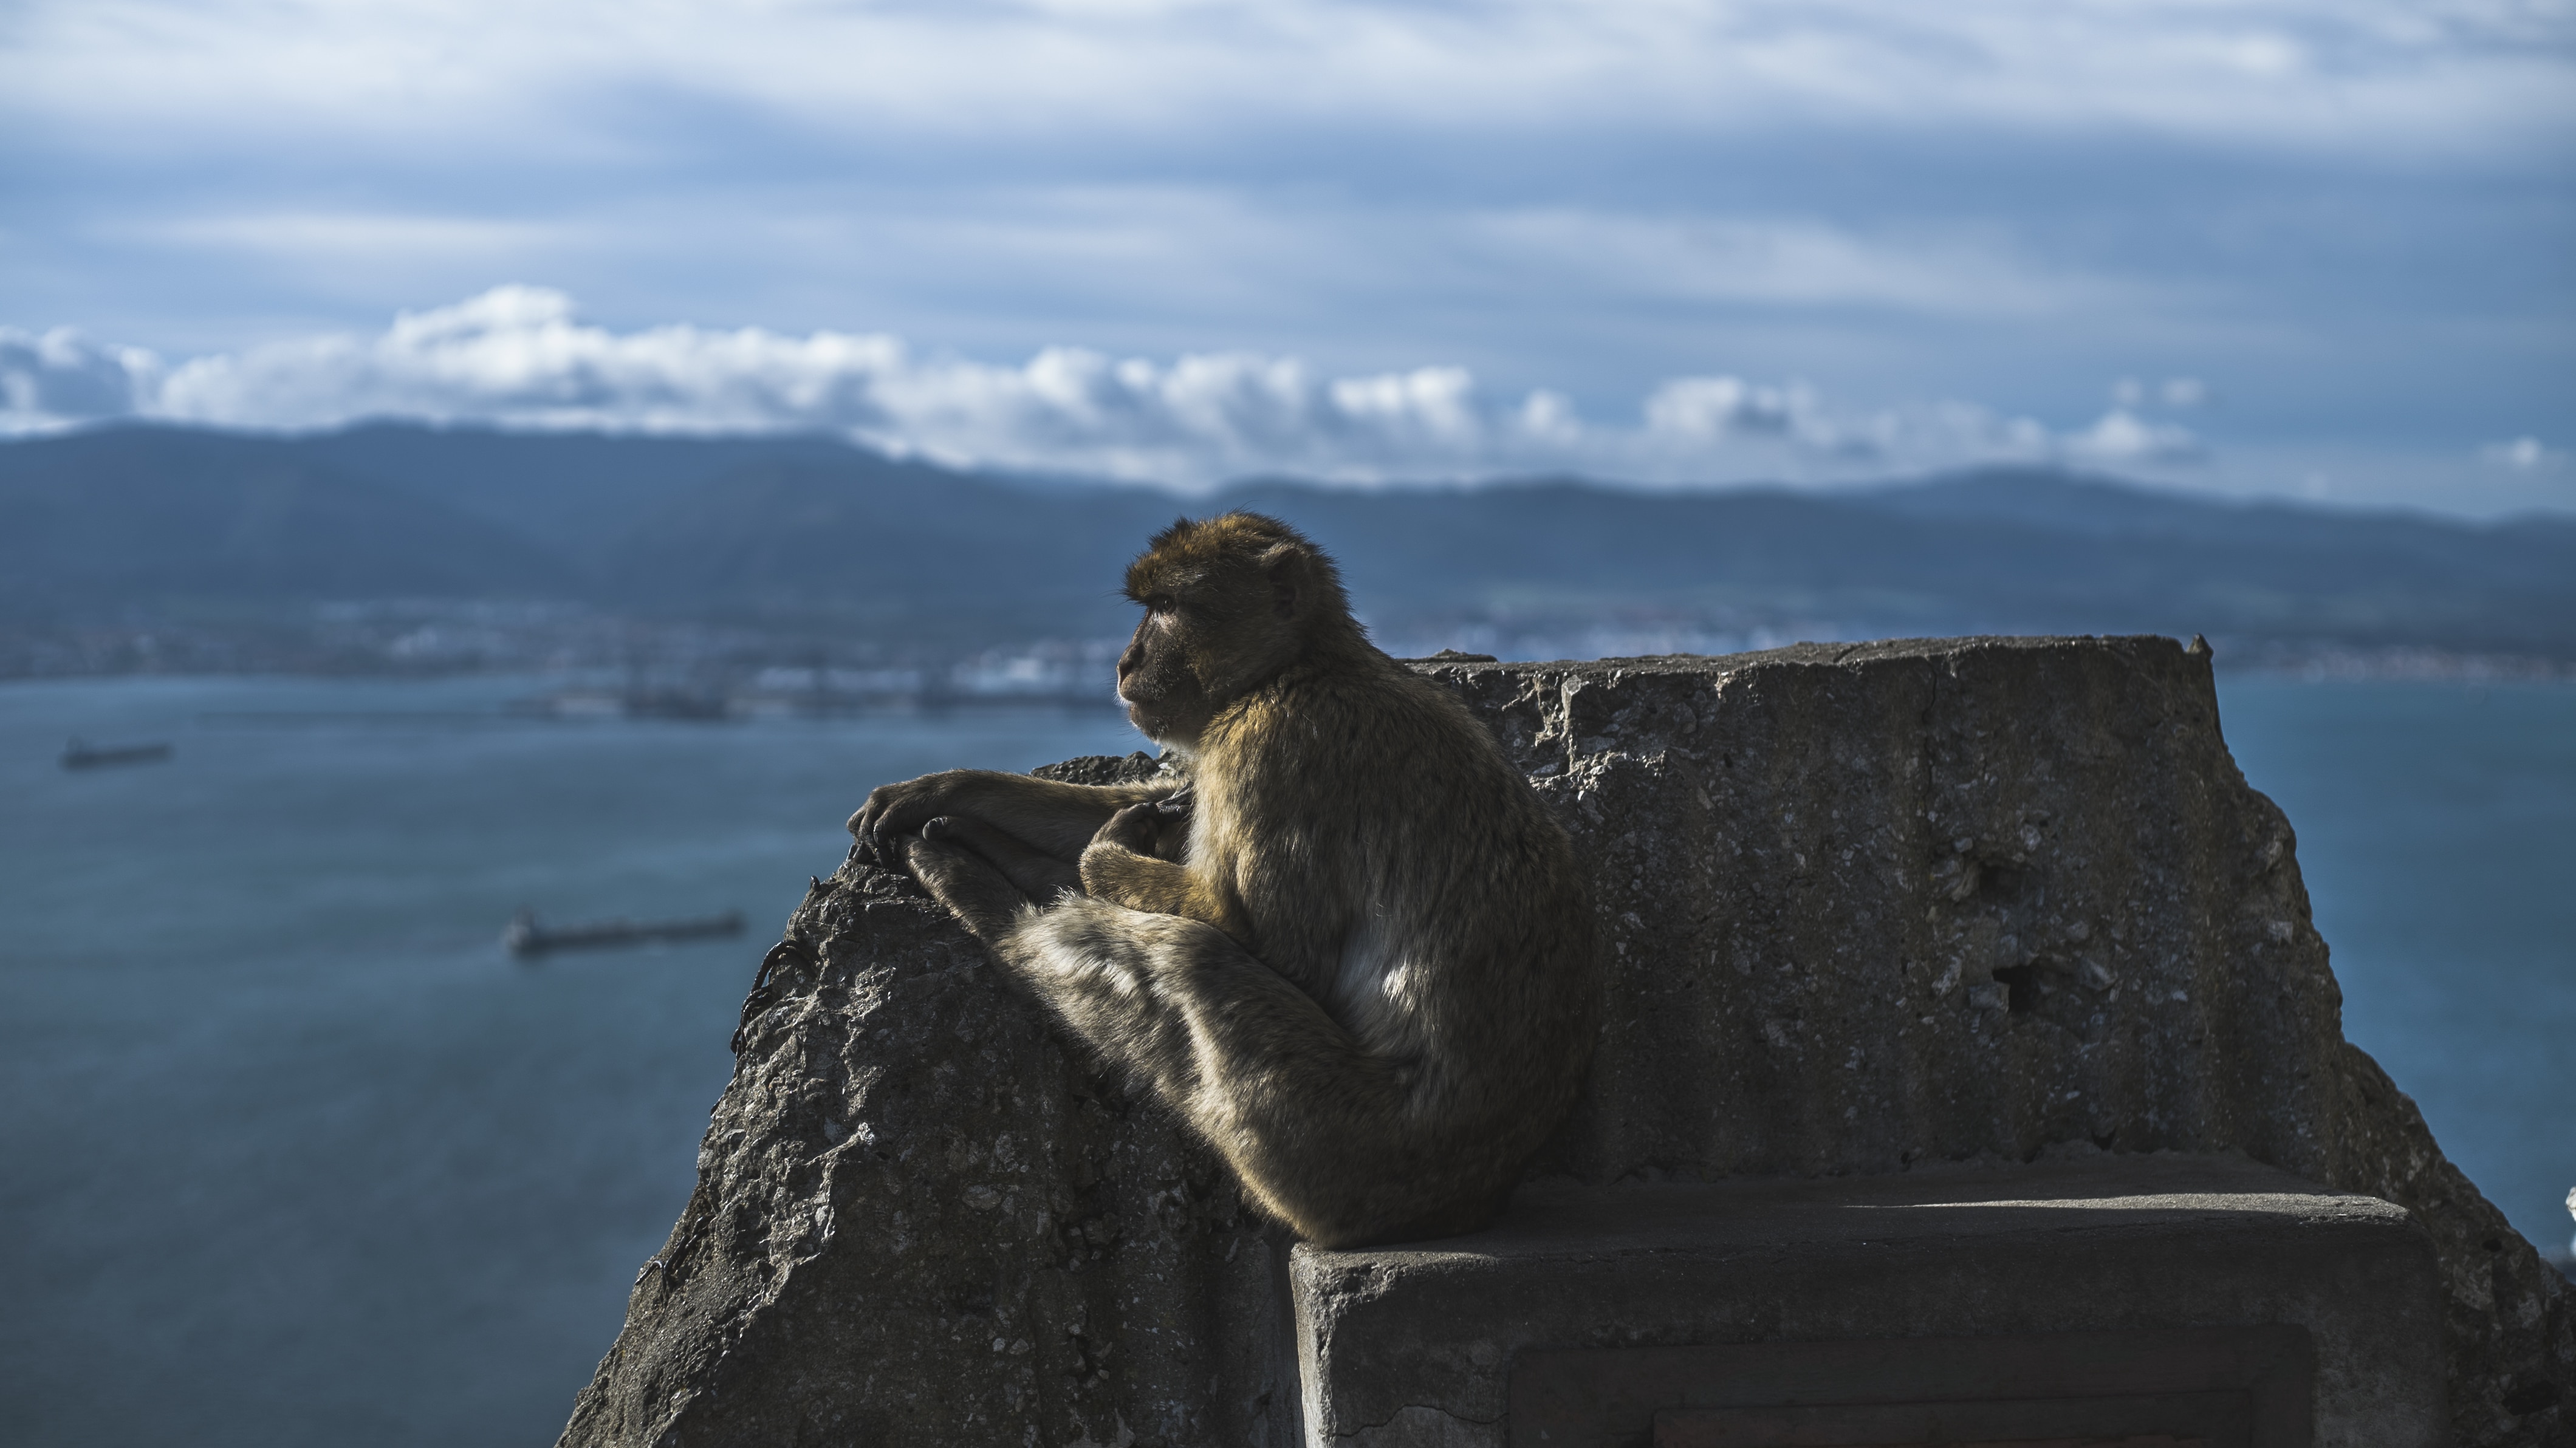 primate sitting on rock